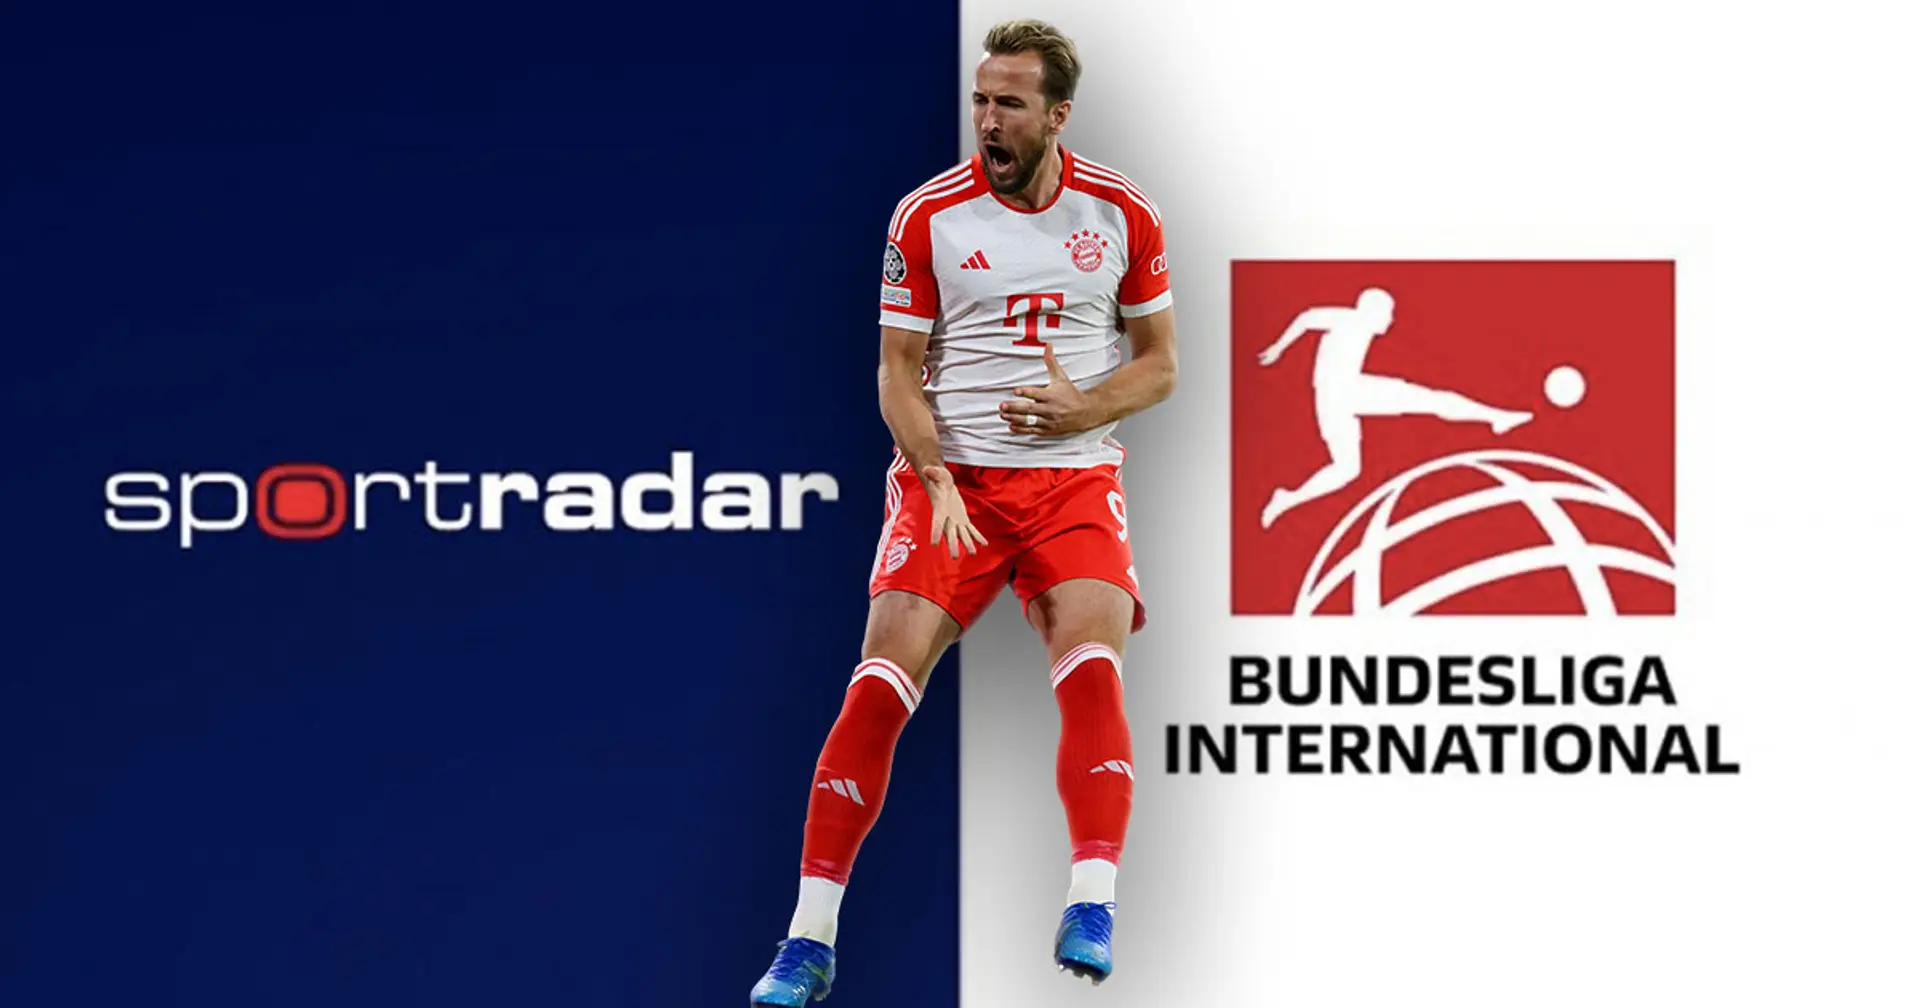 Bundesliga announce long-term extension of partnership with Sportradar